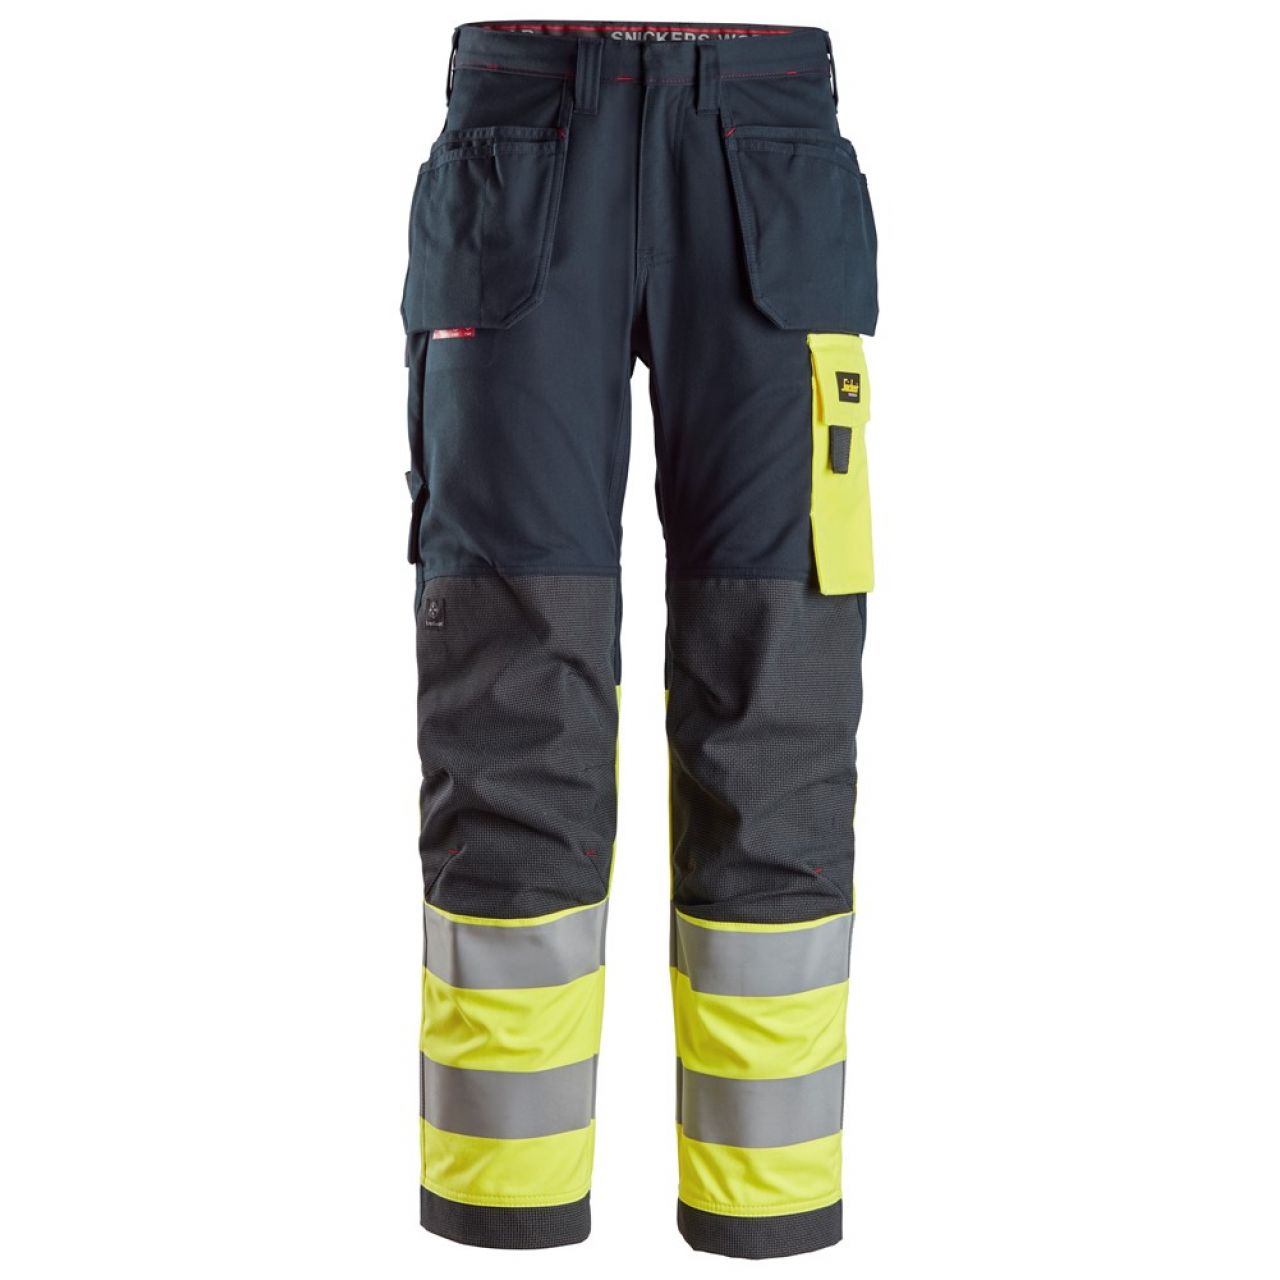 6276 Pantalones largos de trabajo de alta visibilidad clase 1 con bolsillos flotantes ProtecWork azul marino-amarillo talla 44